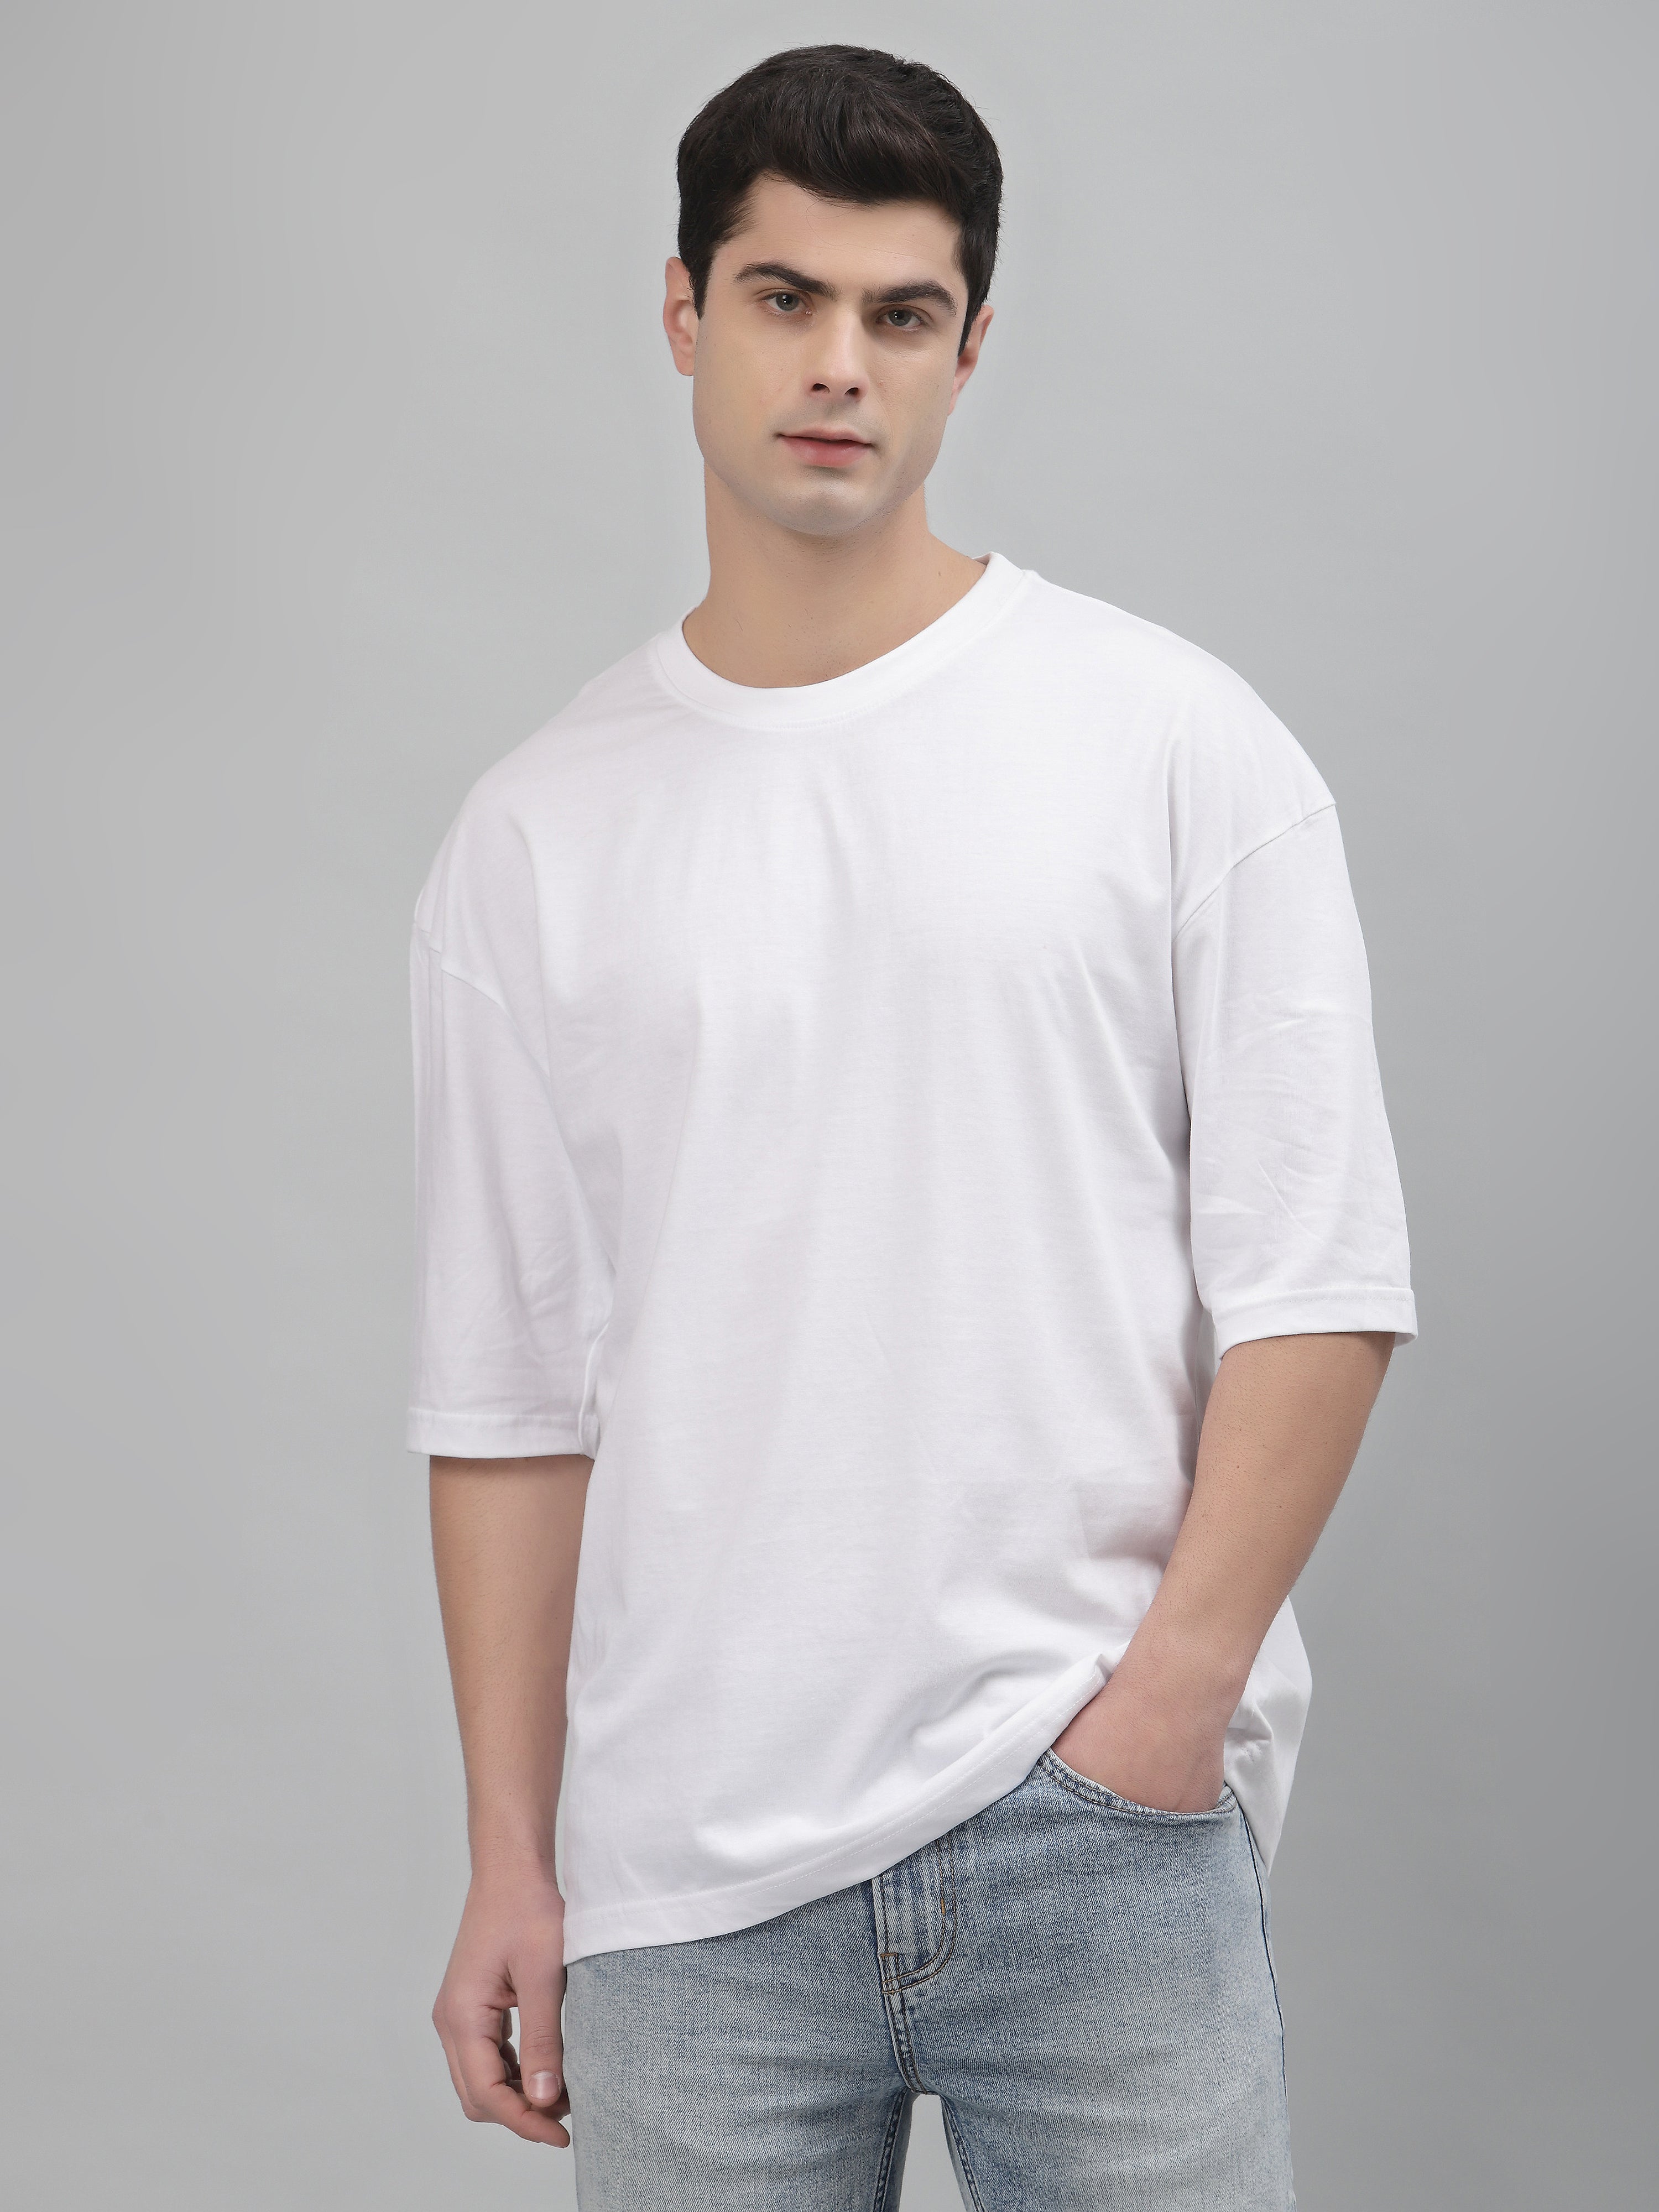 The Oversized White T-Shirt: A Sartorial Revelation